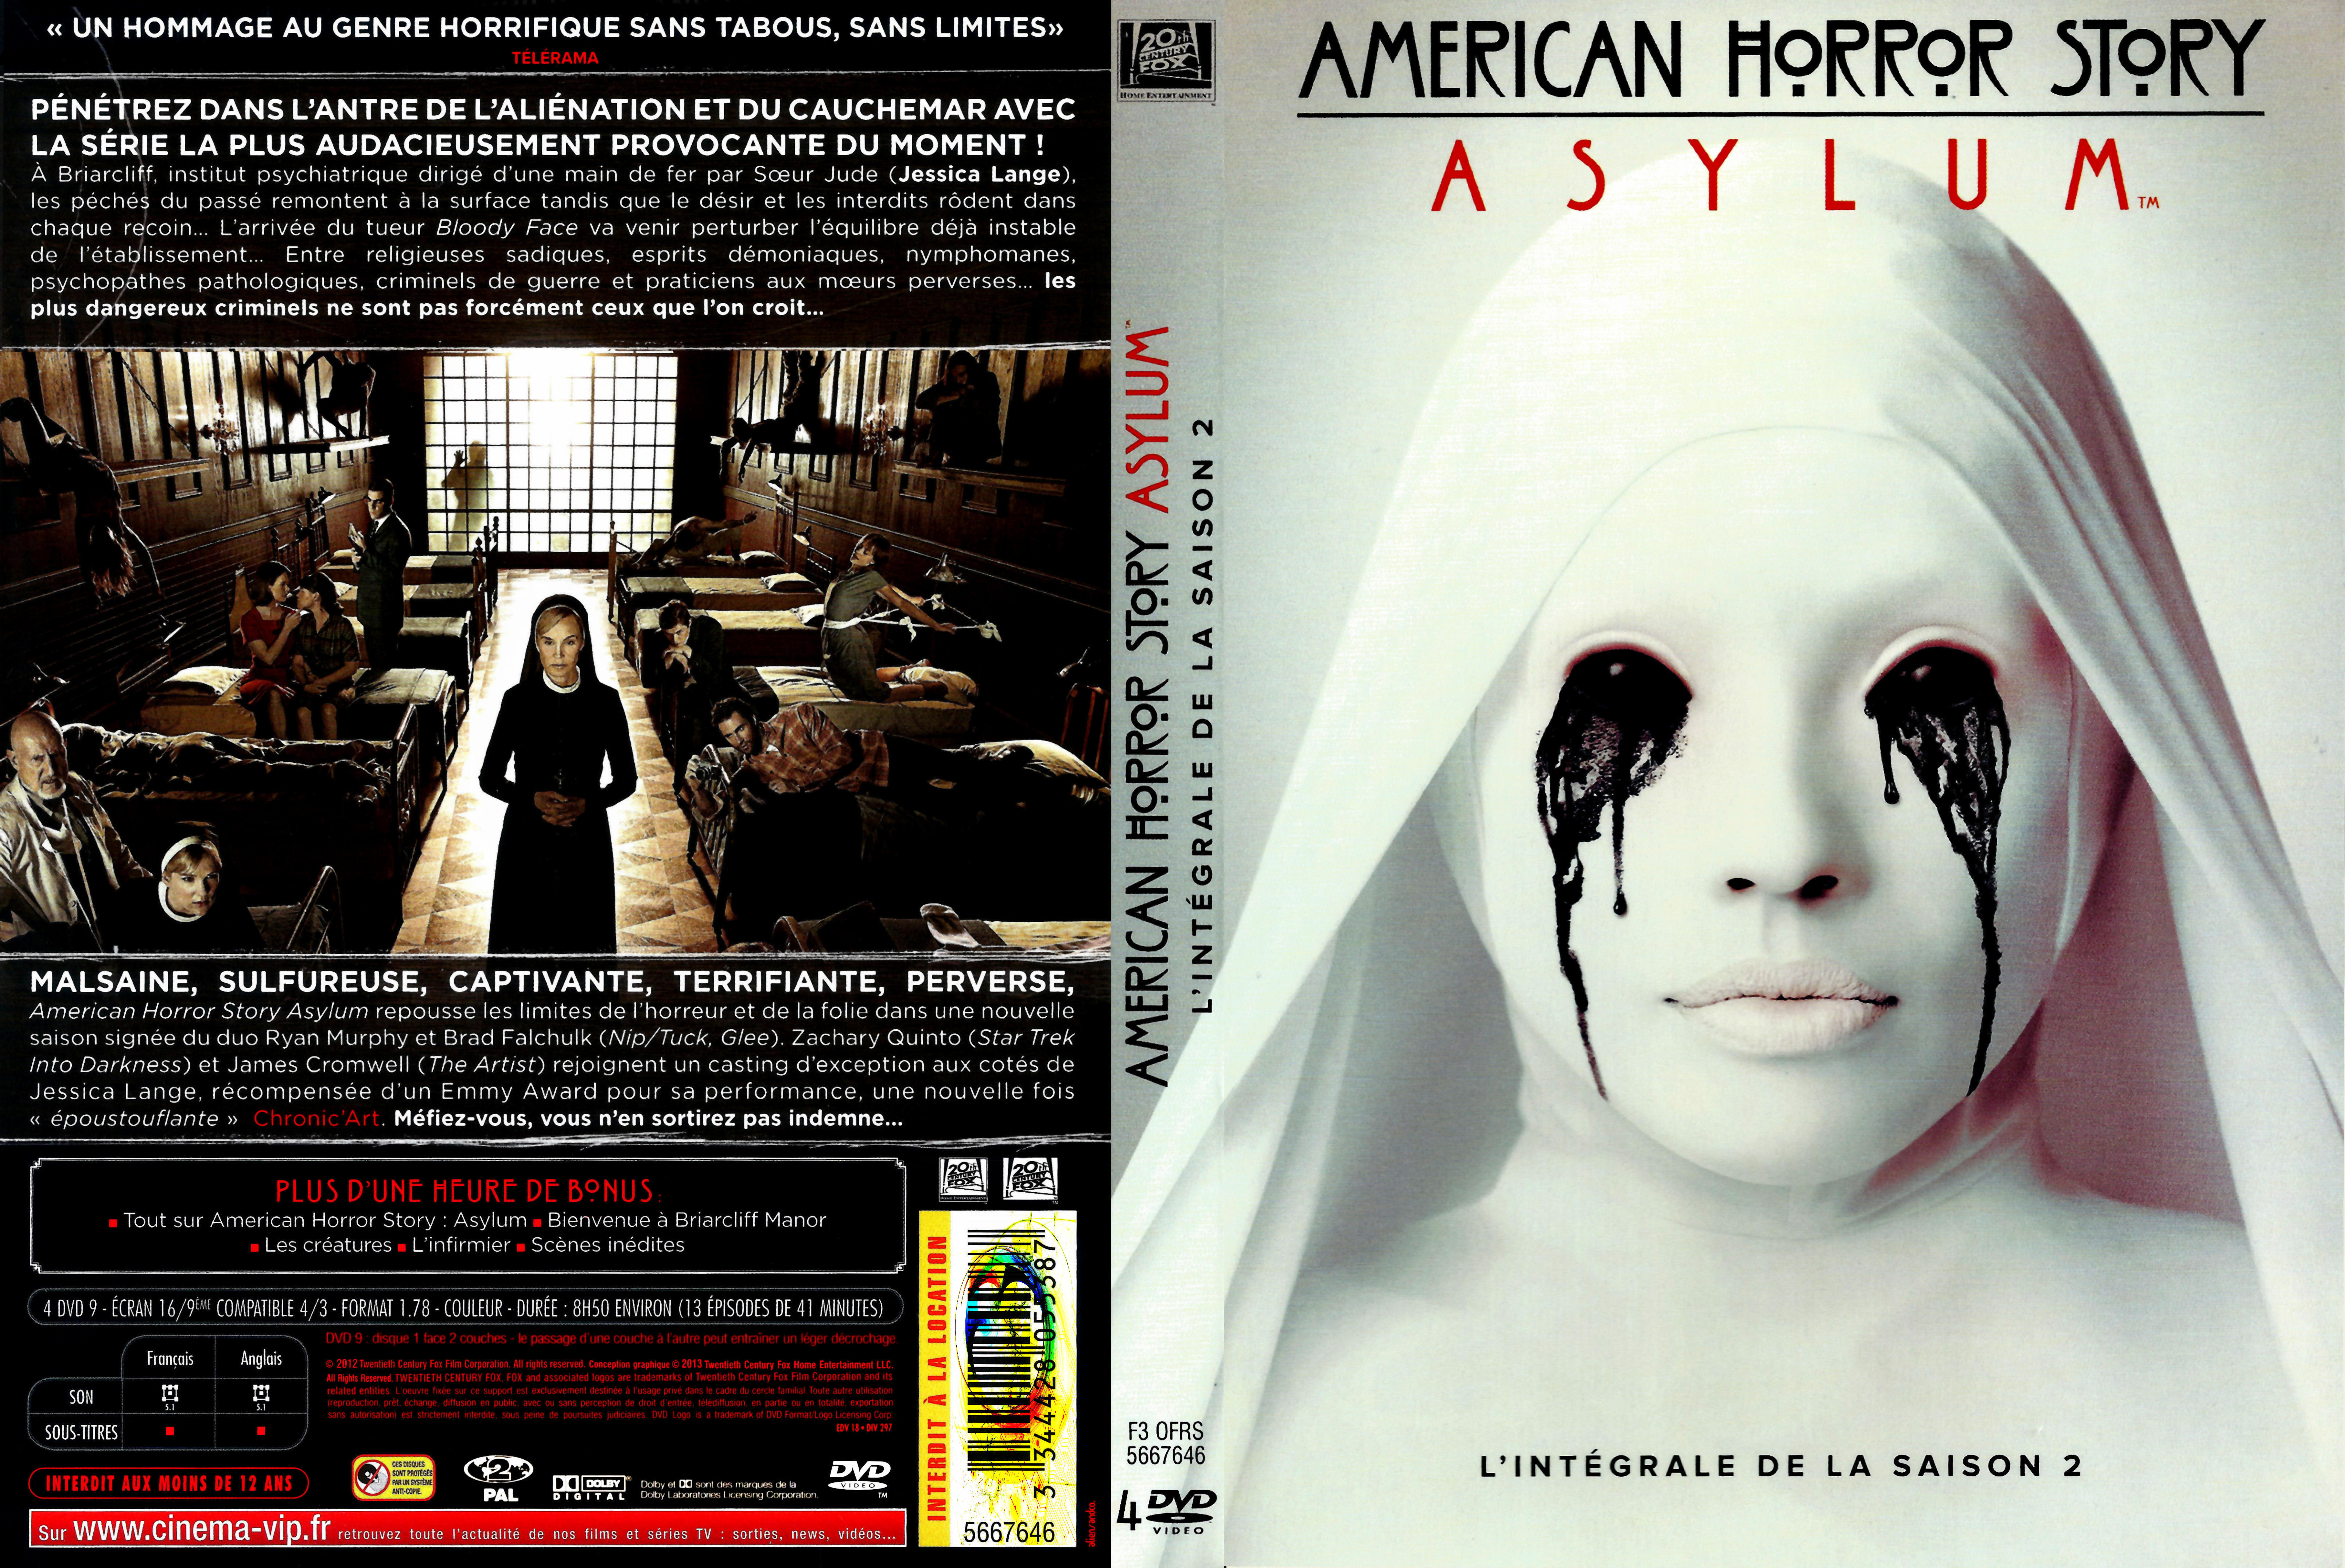 Jaquette DVD American Horror Story saison 2